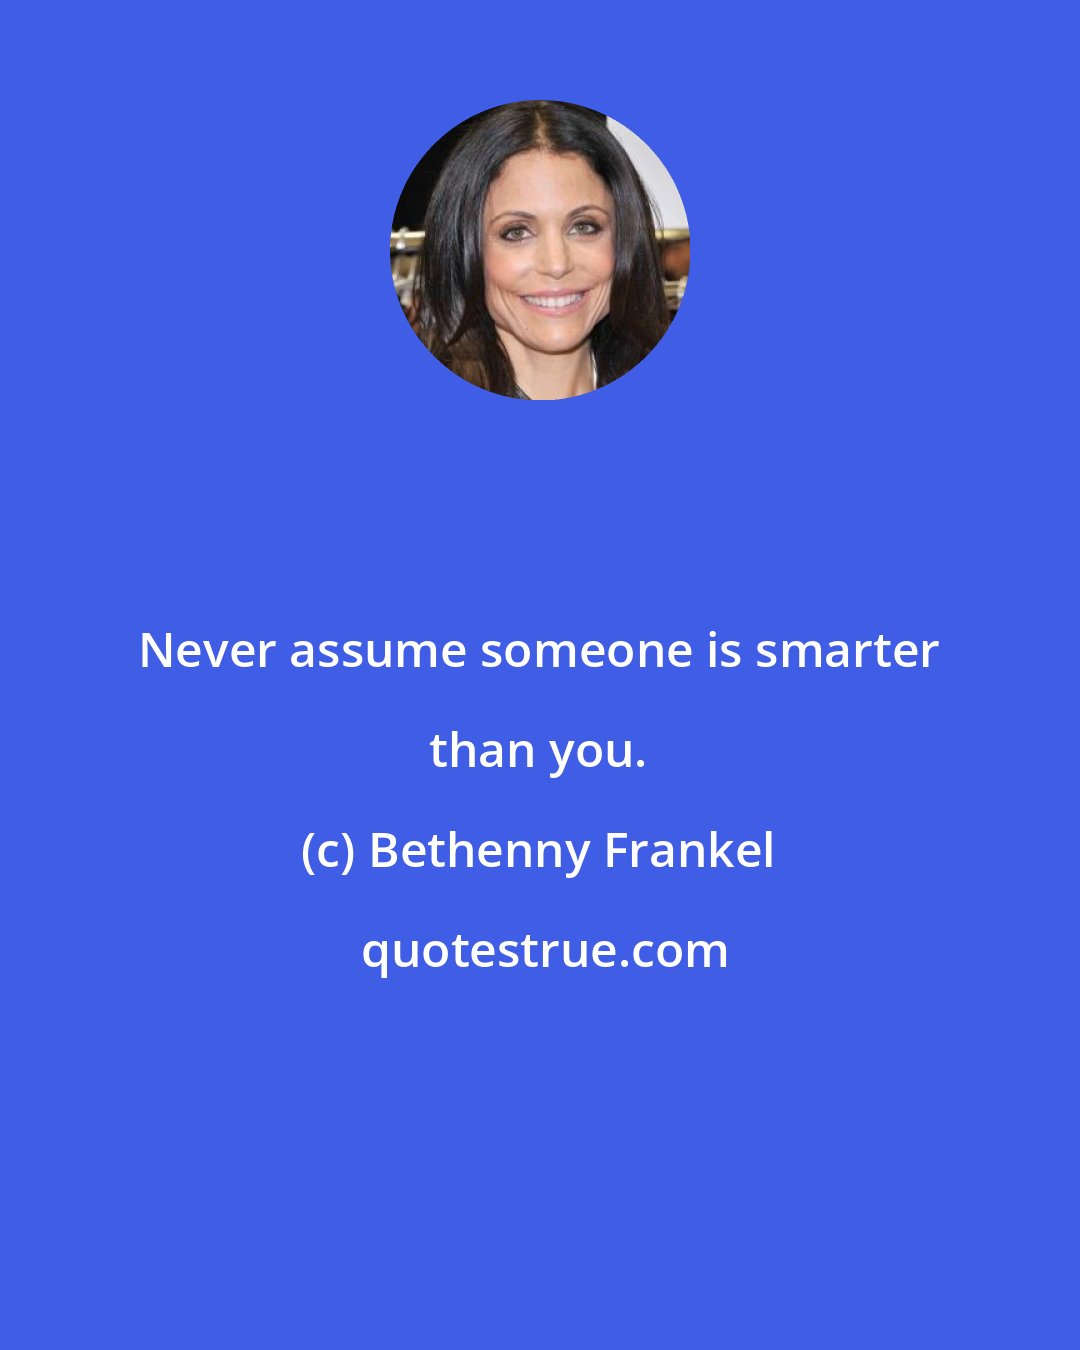 Bethenny Frankel: Never assume someone is smarter than you.